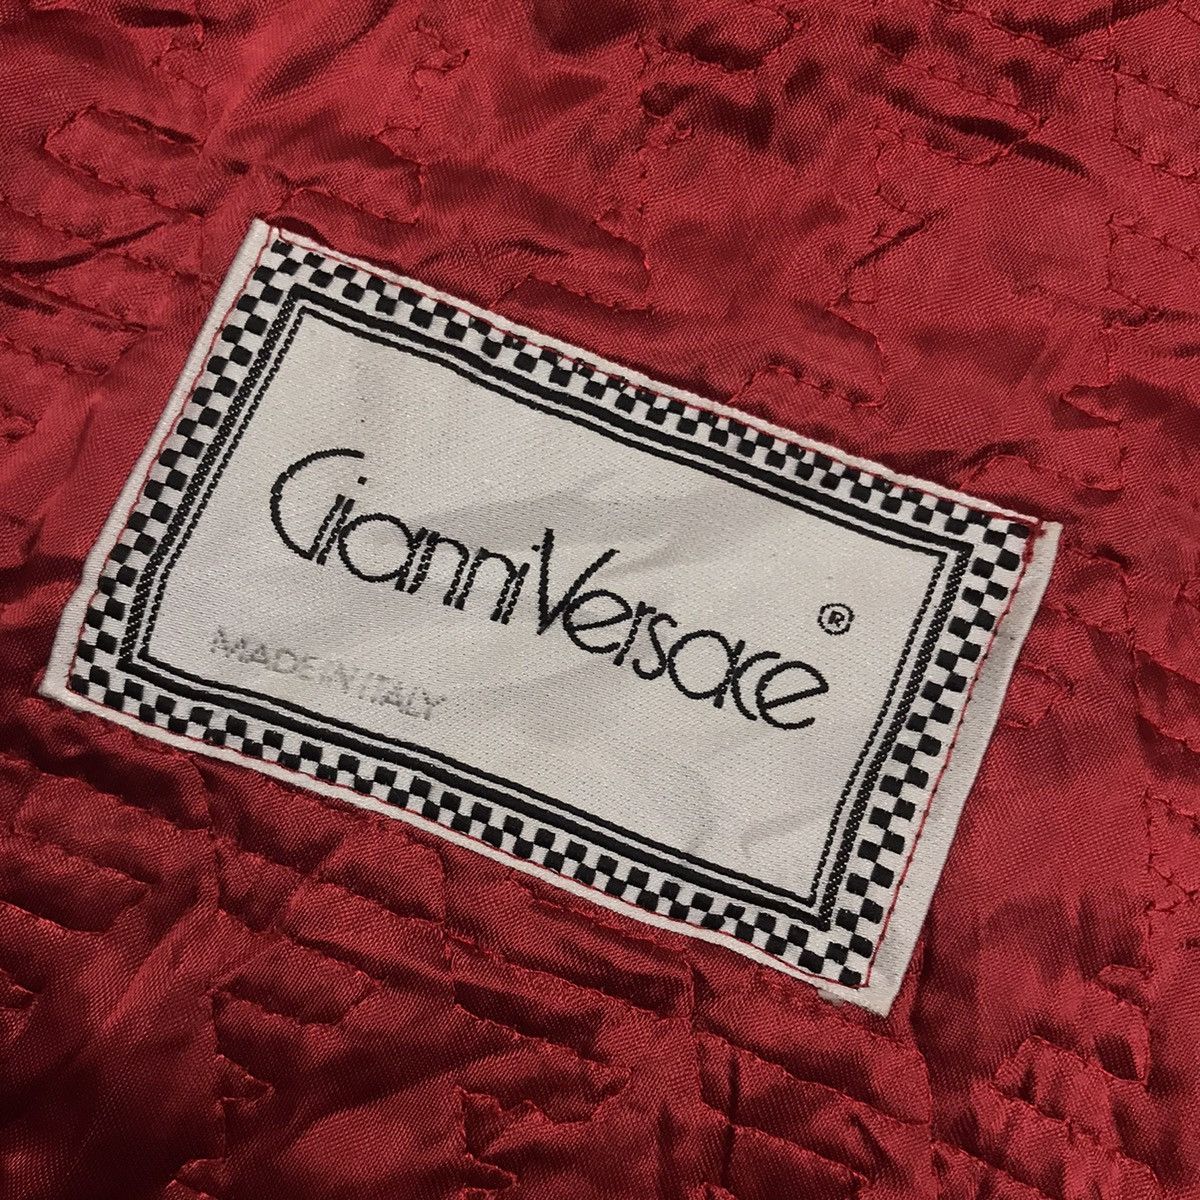 Versace Vintage Gianni Versace Quilted Suede Duffle Coat Jacket Size US M / EU 48-50 / 2 - 8 Thumbnail